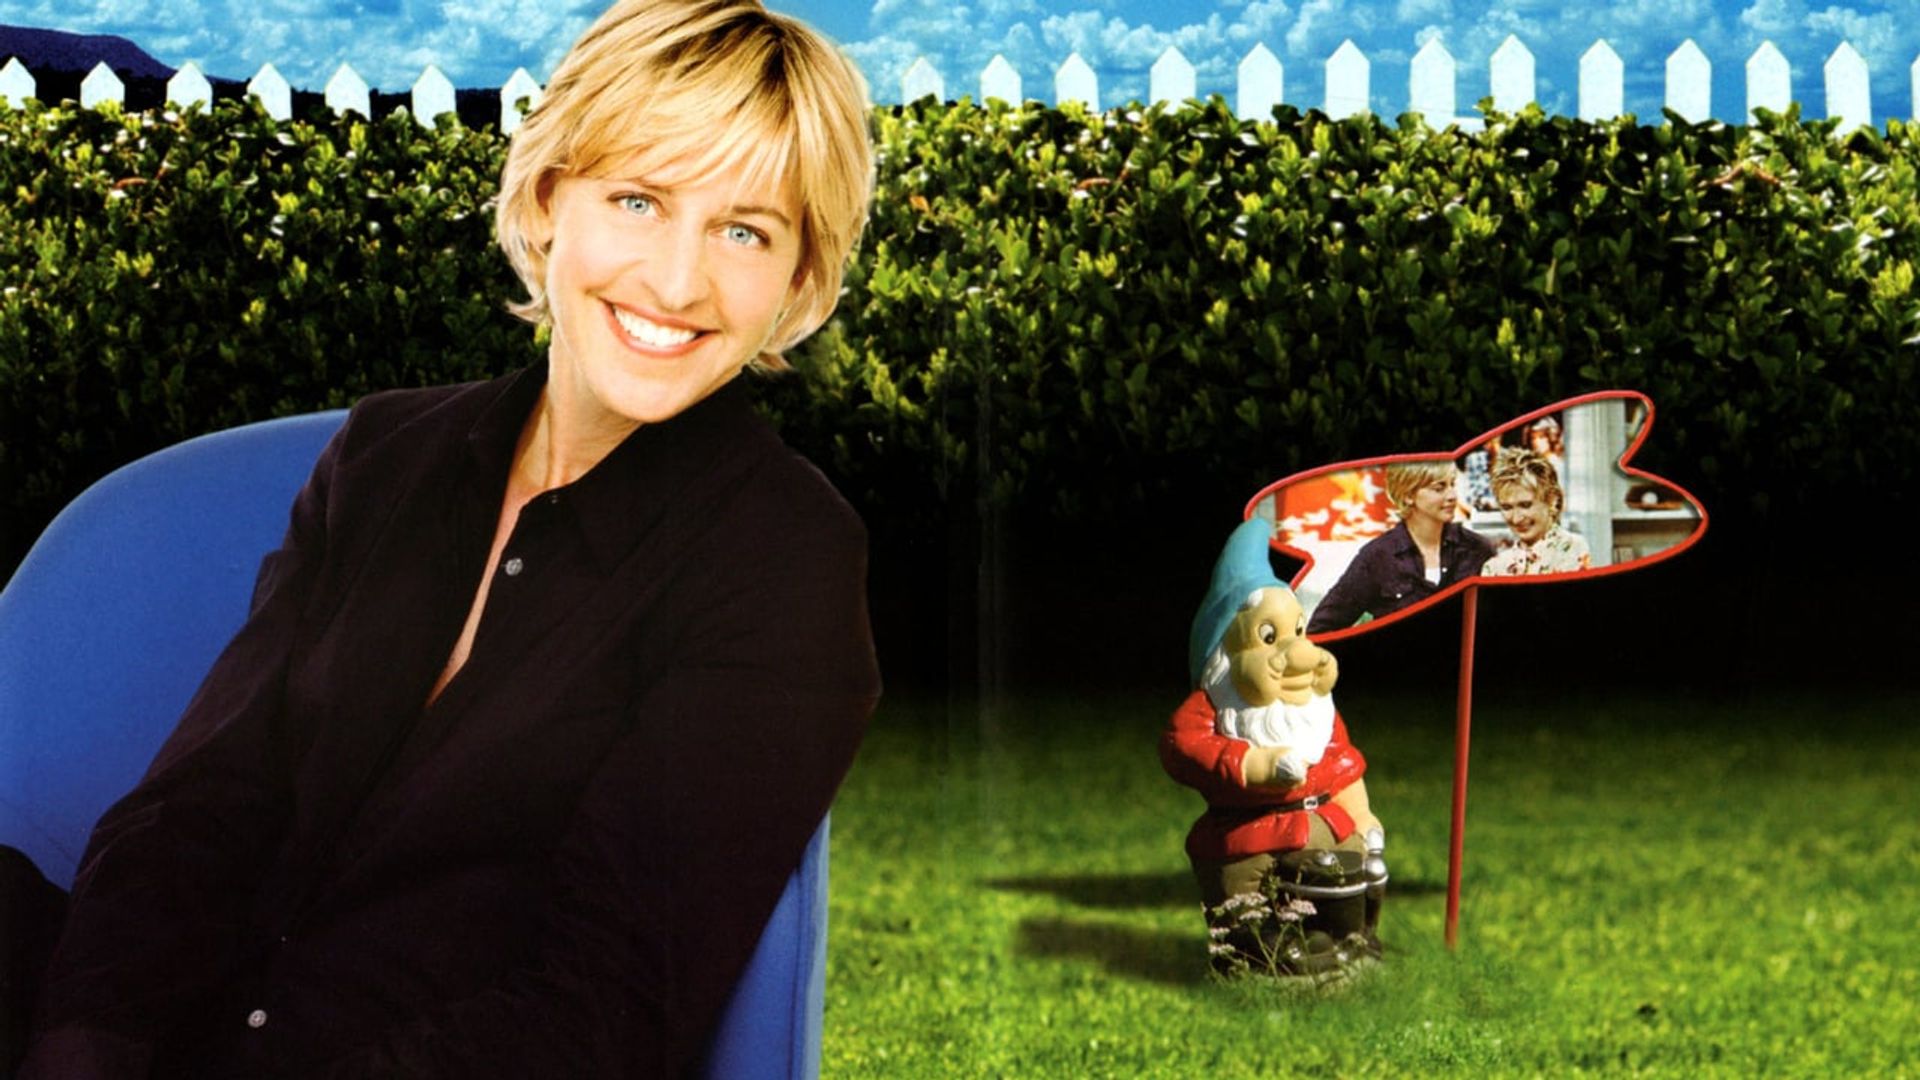 The Ellen Show background